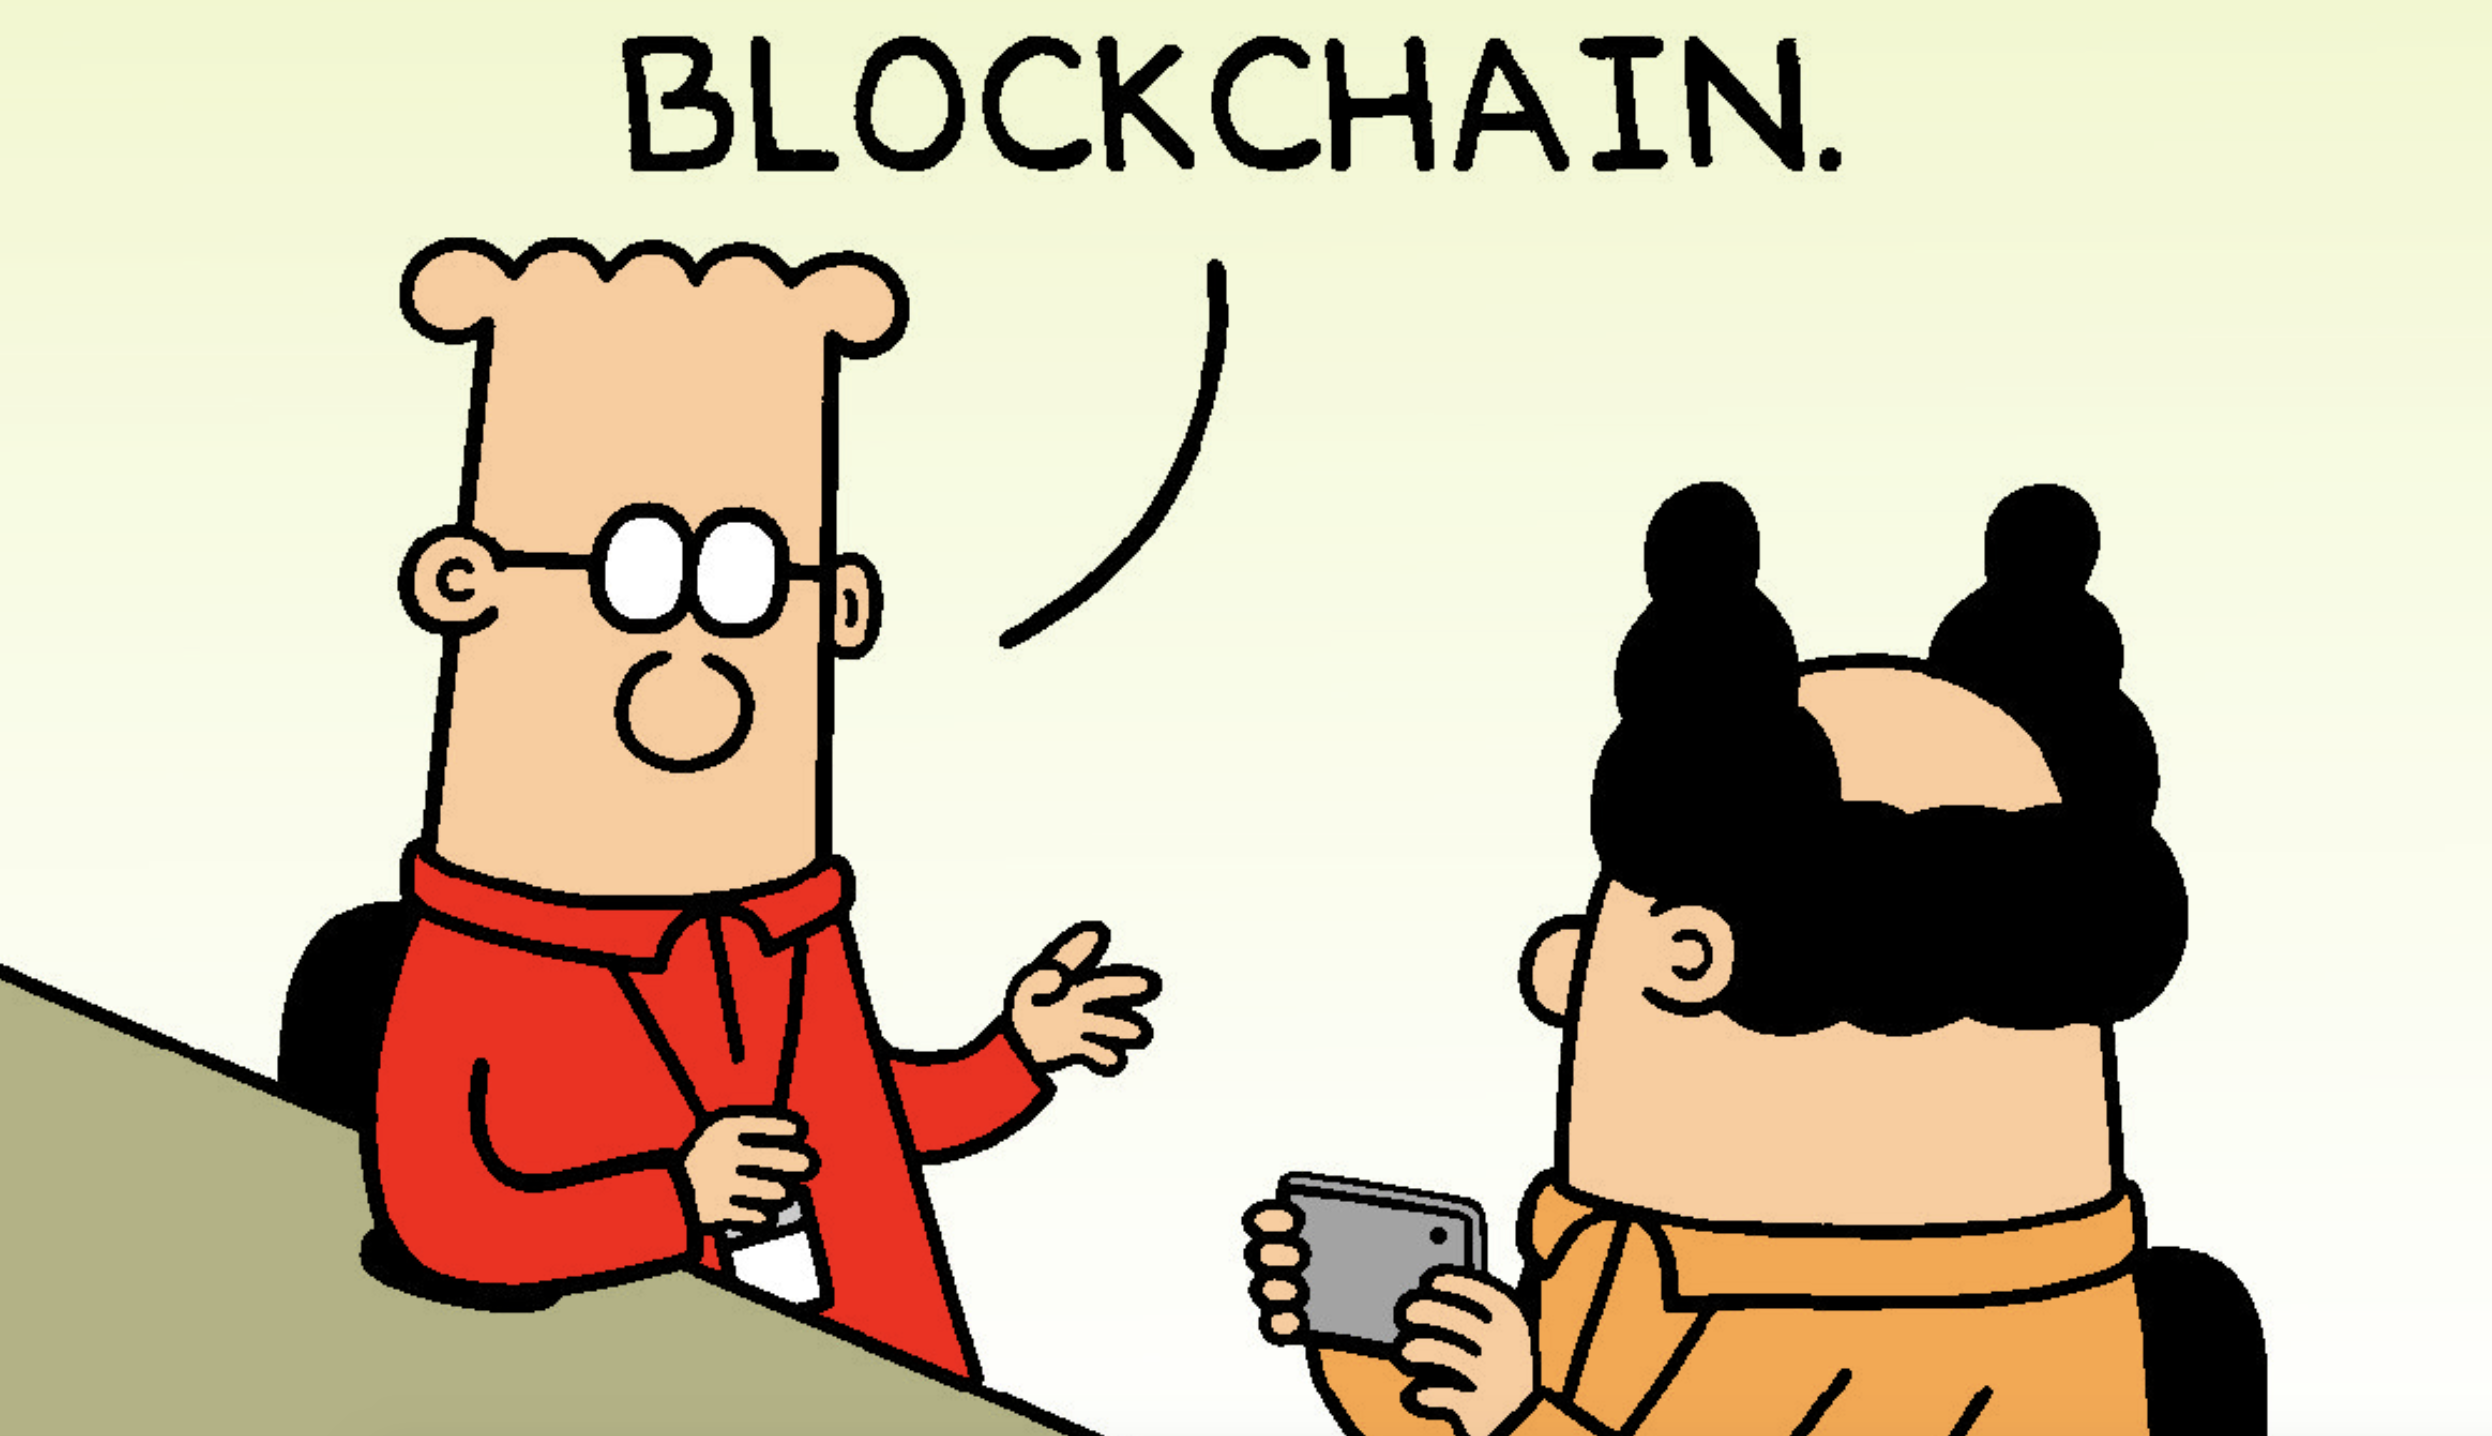 Dilbert Comics Mock Blockchain Mania - CoinDesk